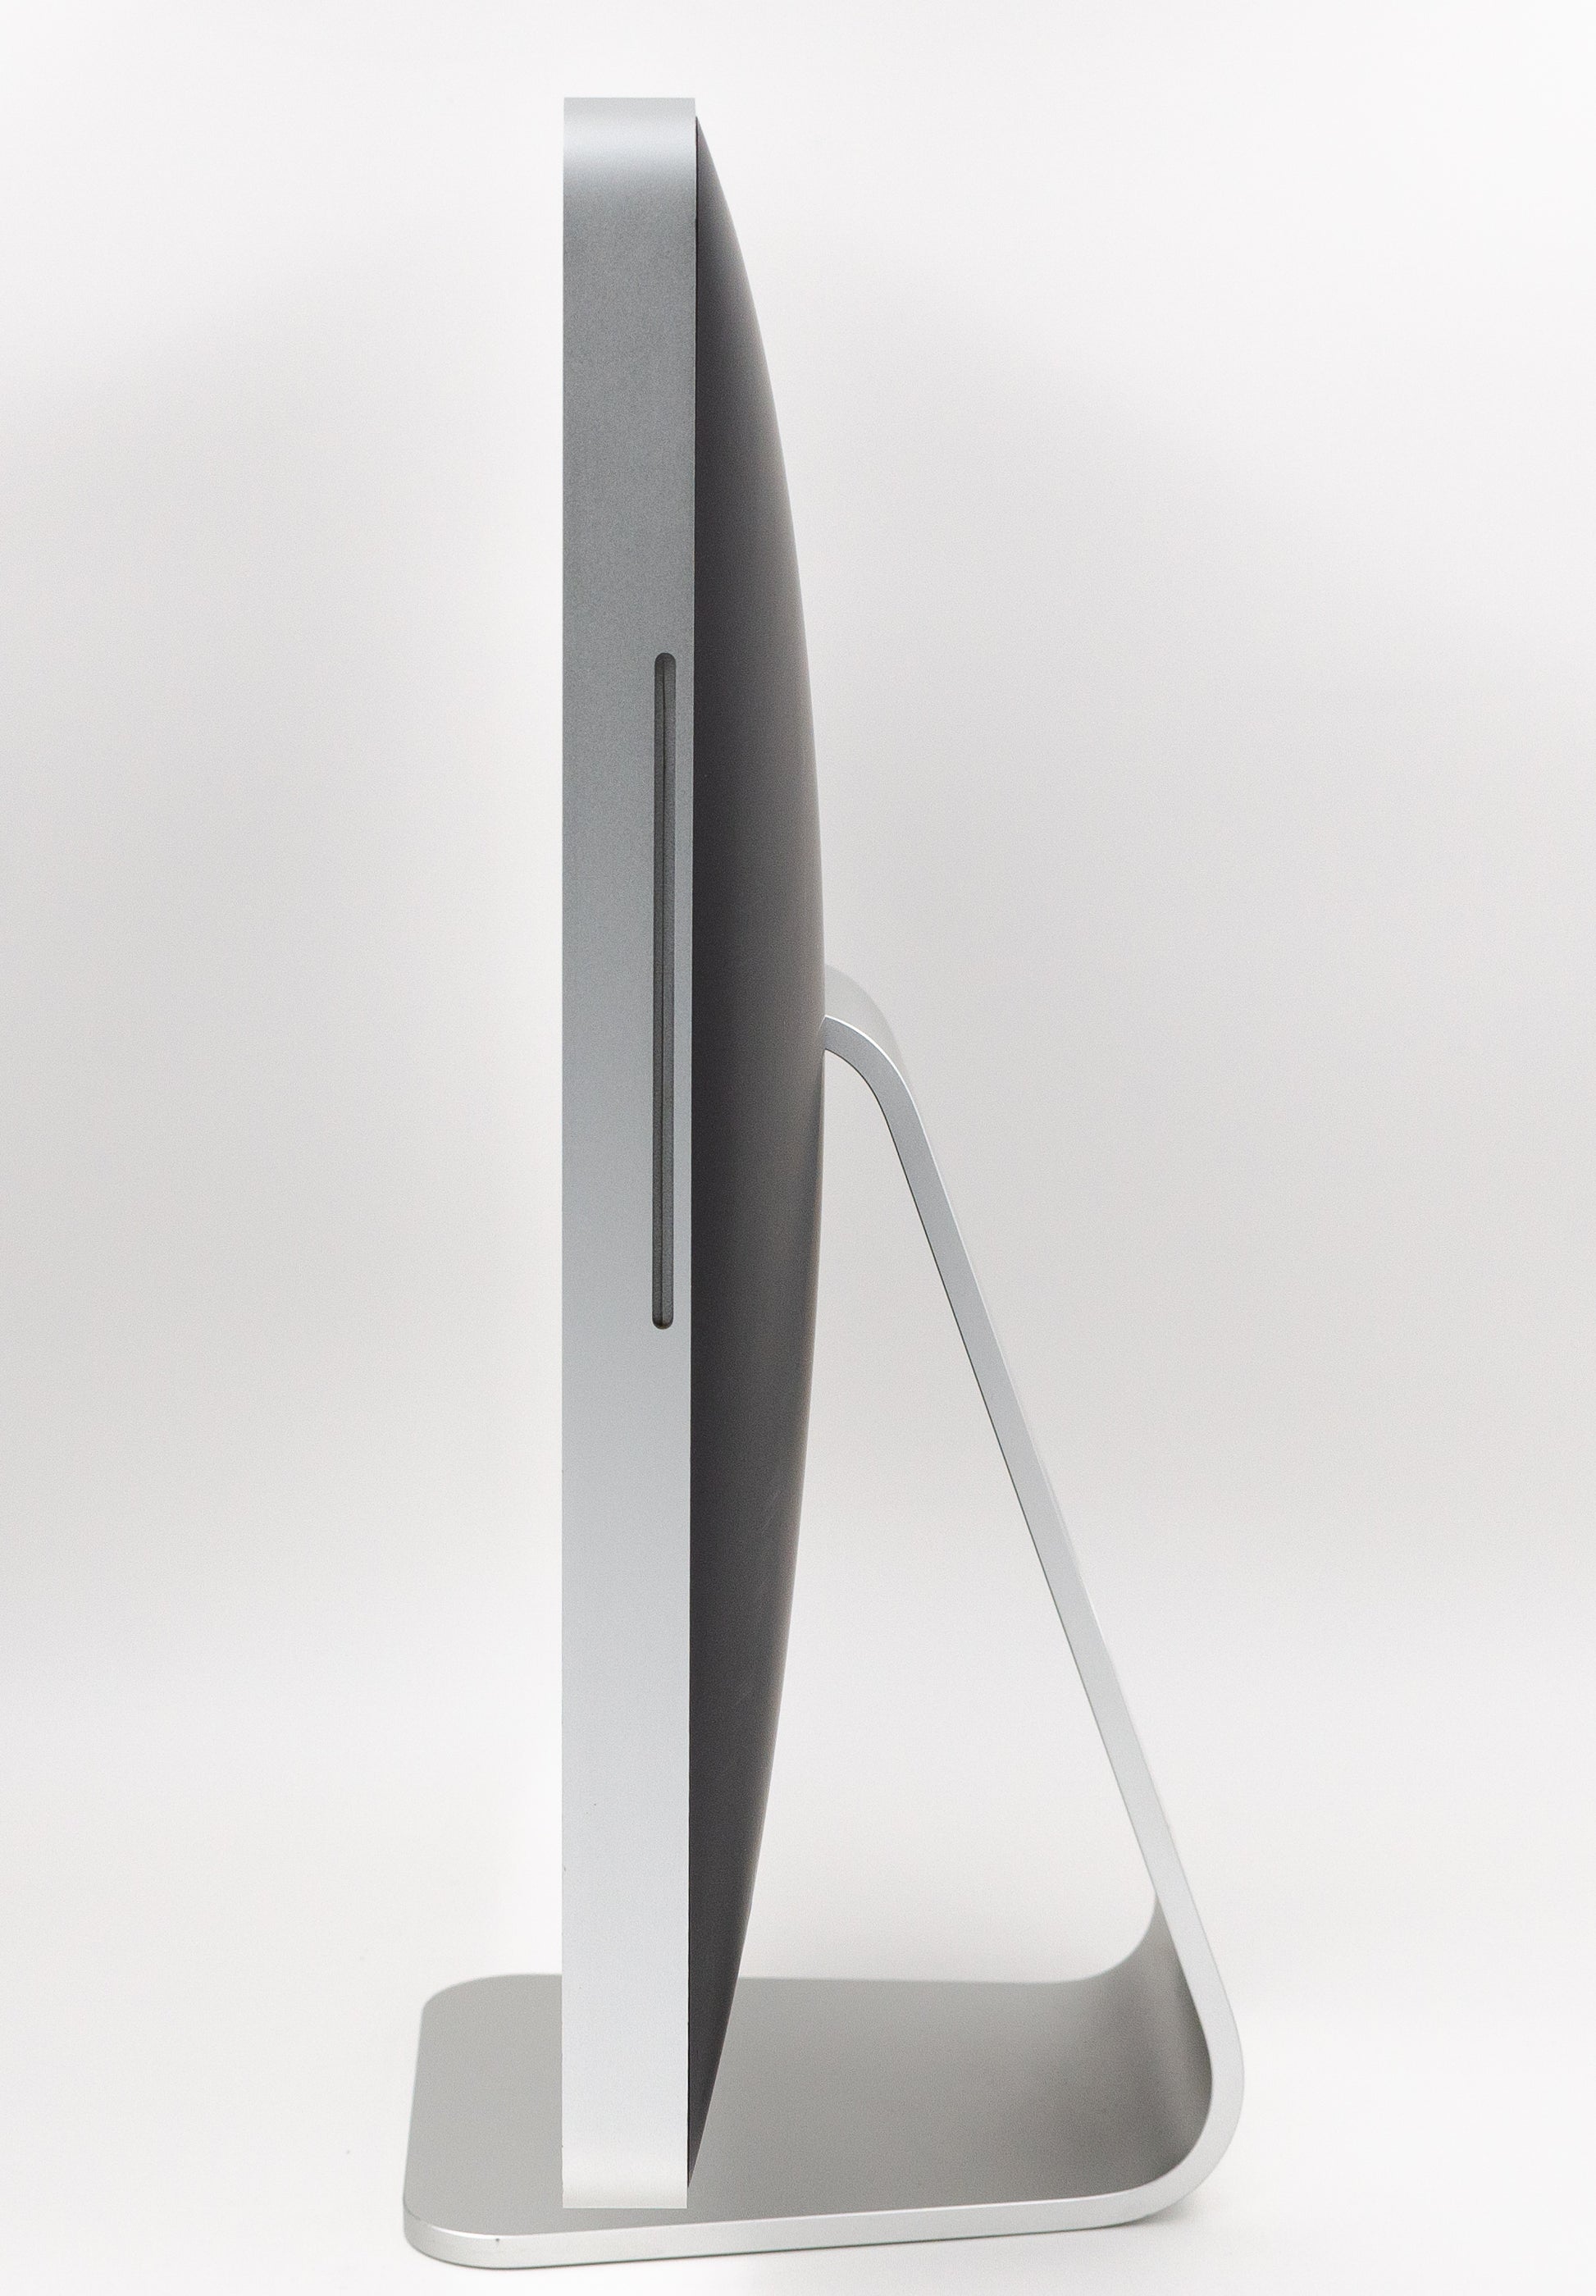 apple-mid-2009-20-inch-imac-a1224-aluminum-c2d - 2ghz, 4gb ram, 9400m - 256mb gpu-2